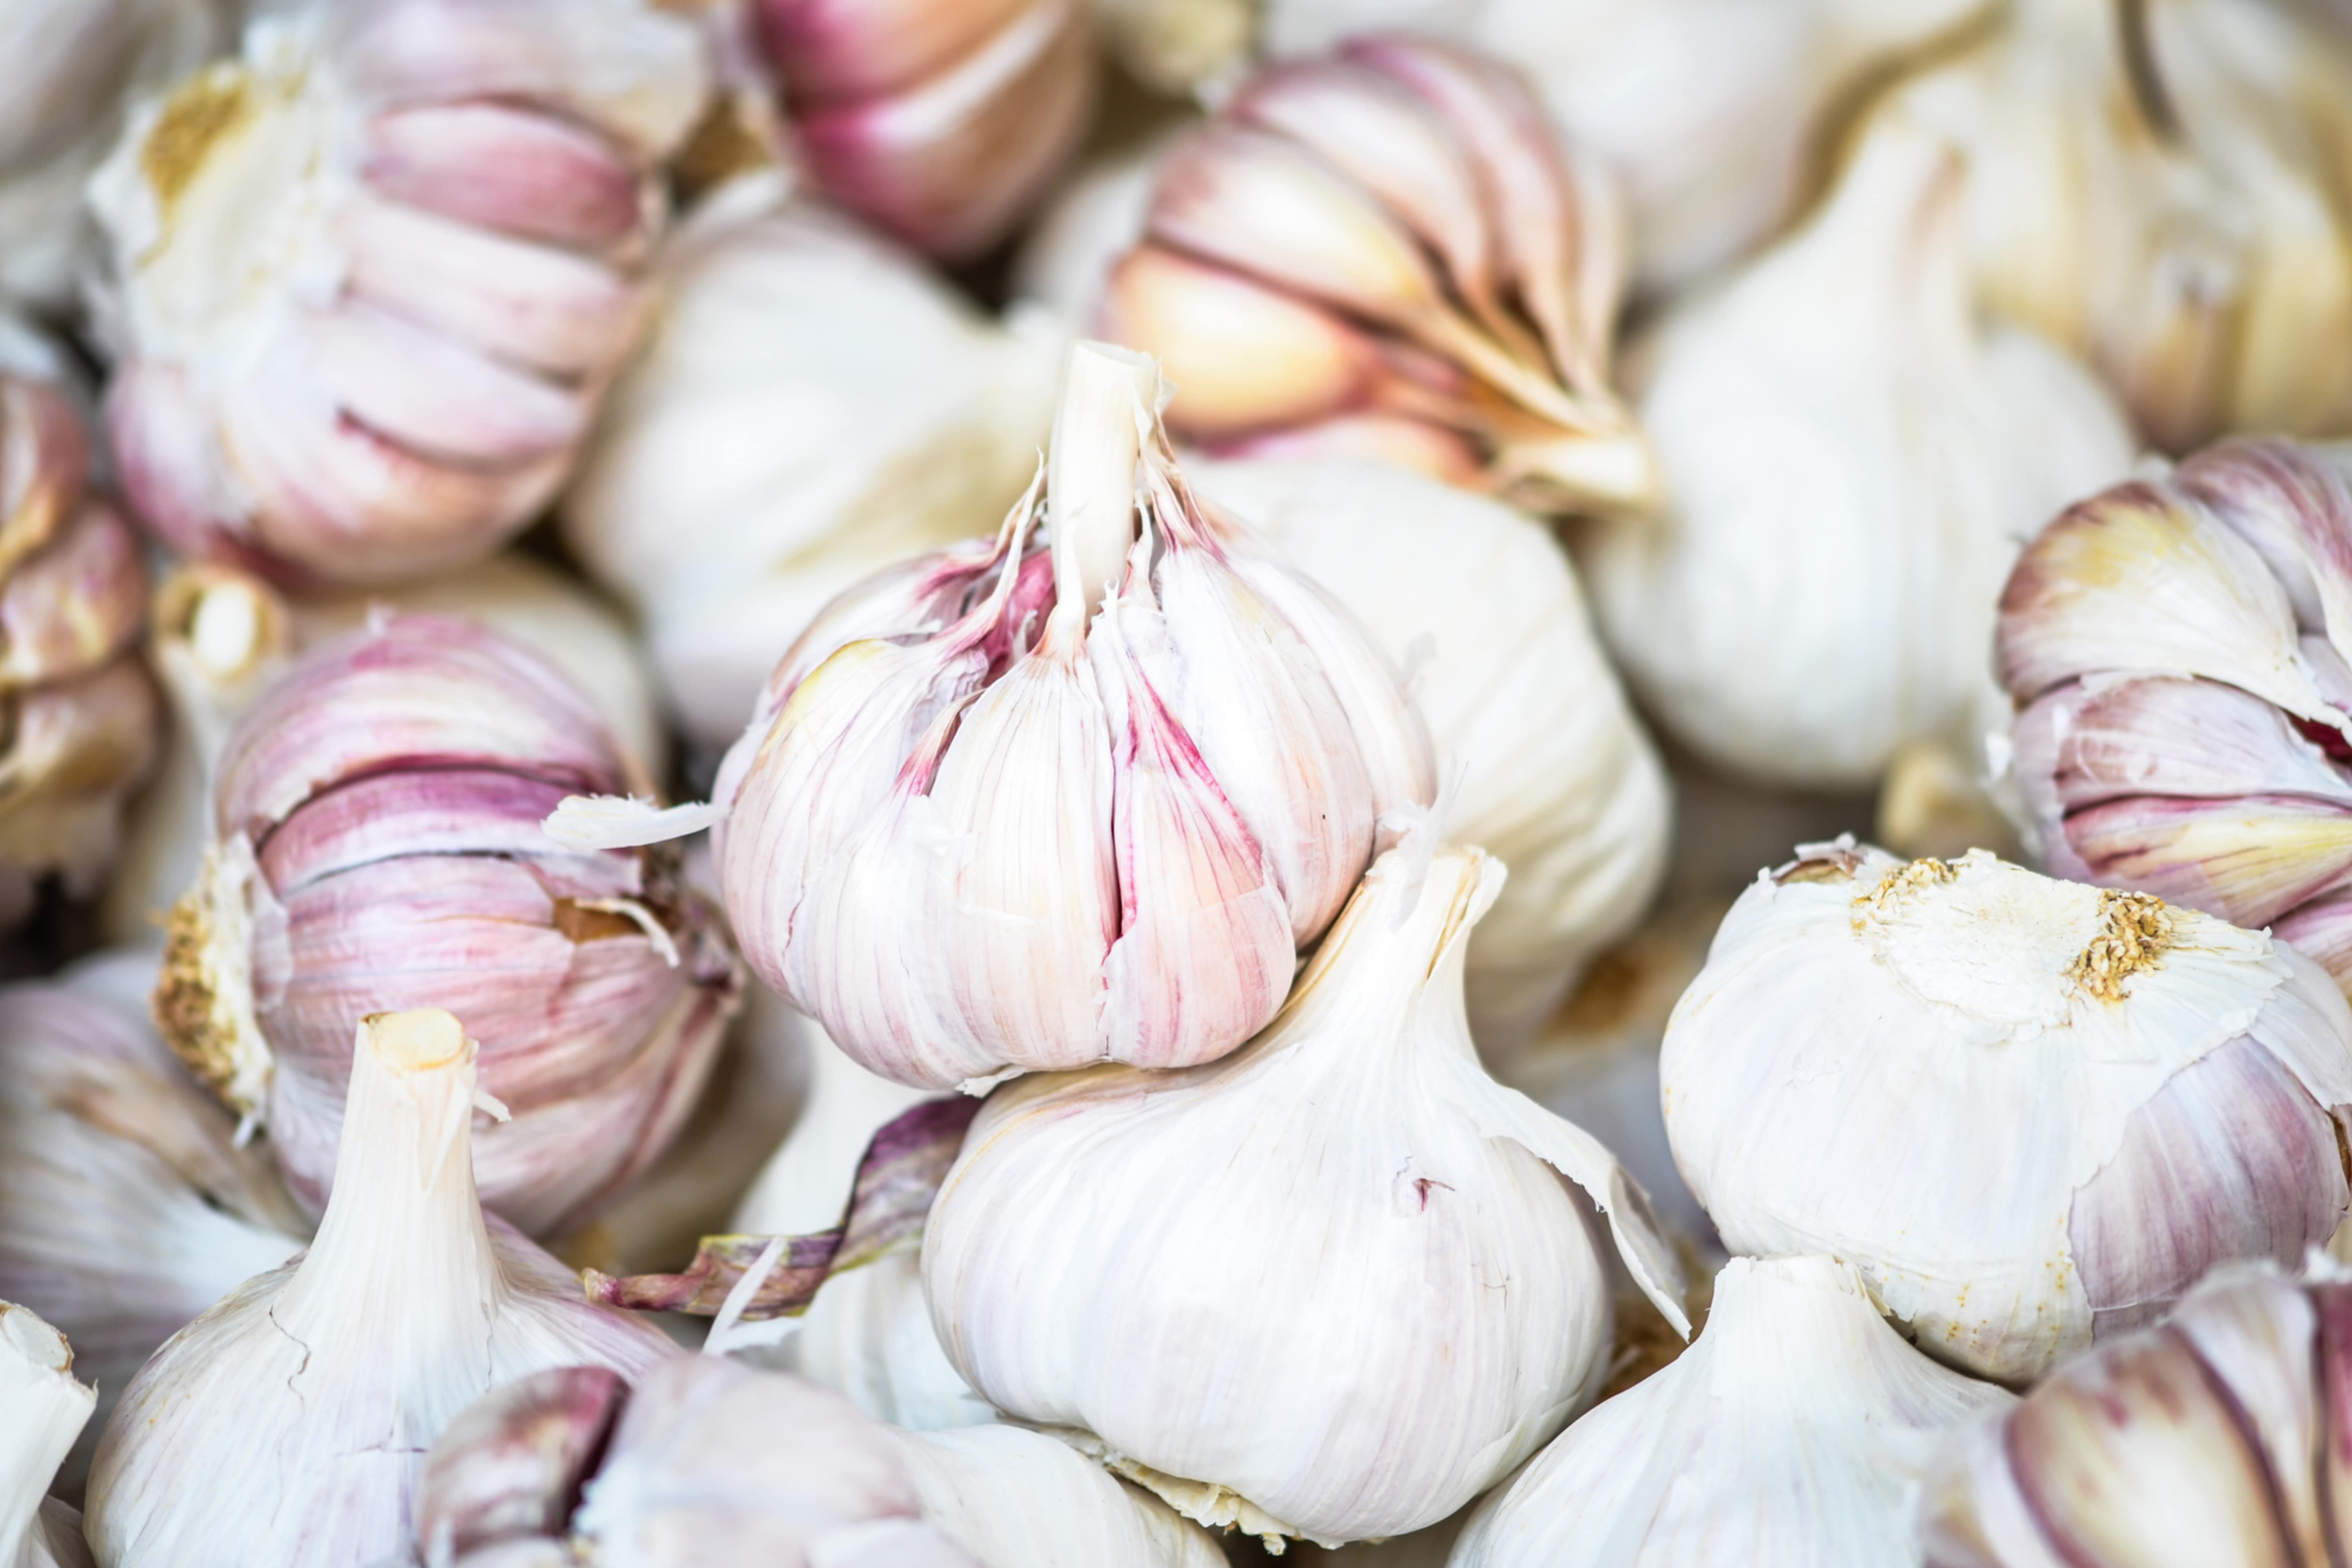 1. The Magical Properties of Garlic